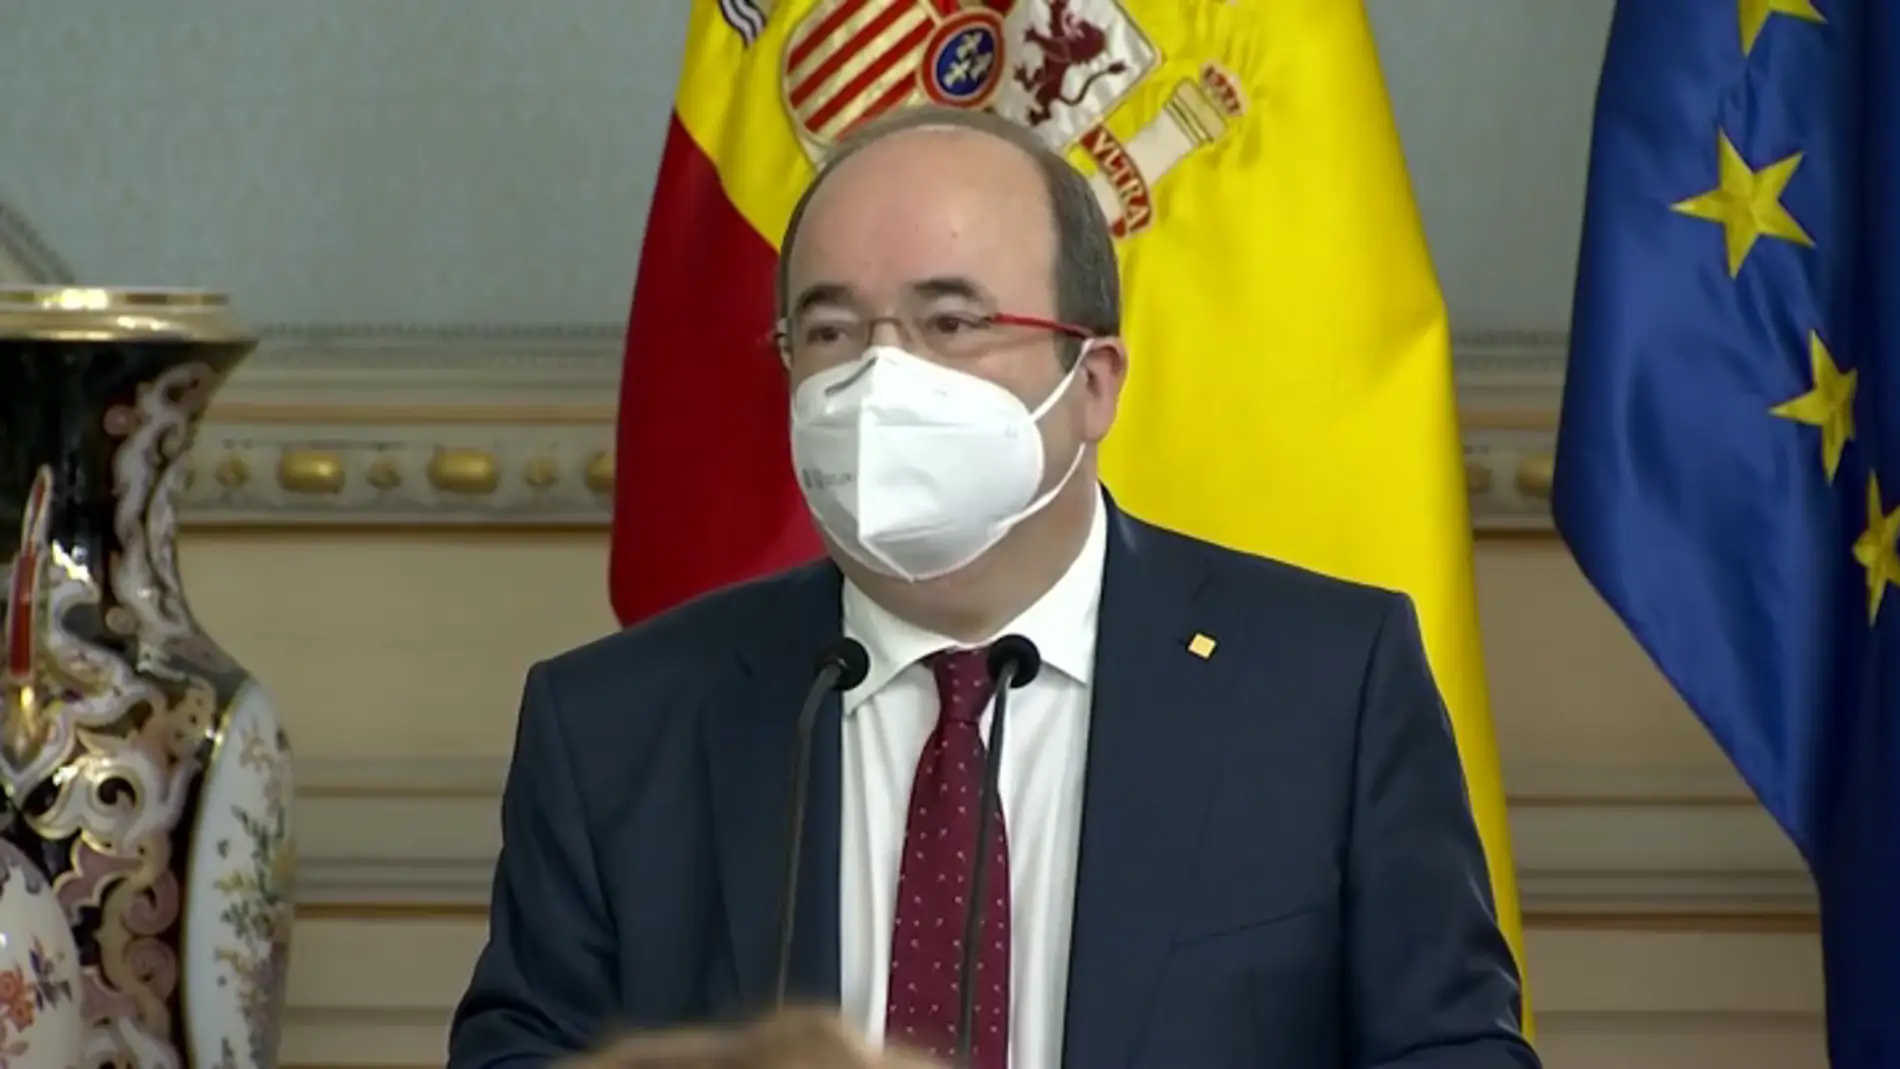 Miquel Iceta toma posesión como ministro de Política Territorial: "Me gusta España como es, diversa, plural y unida"